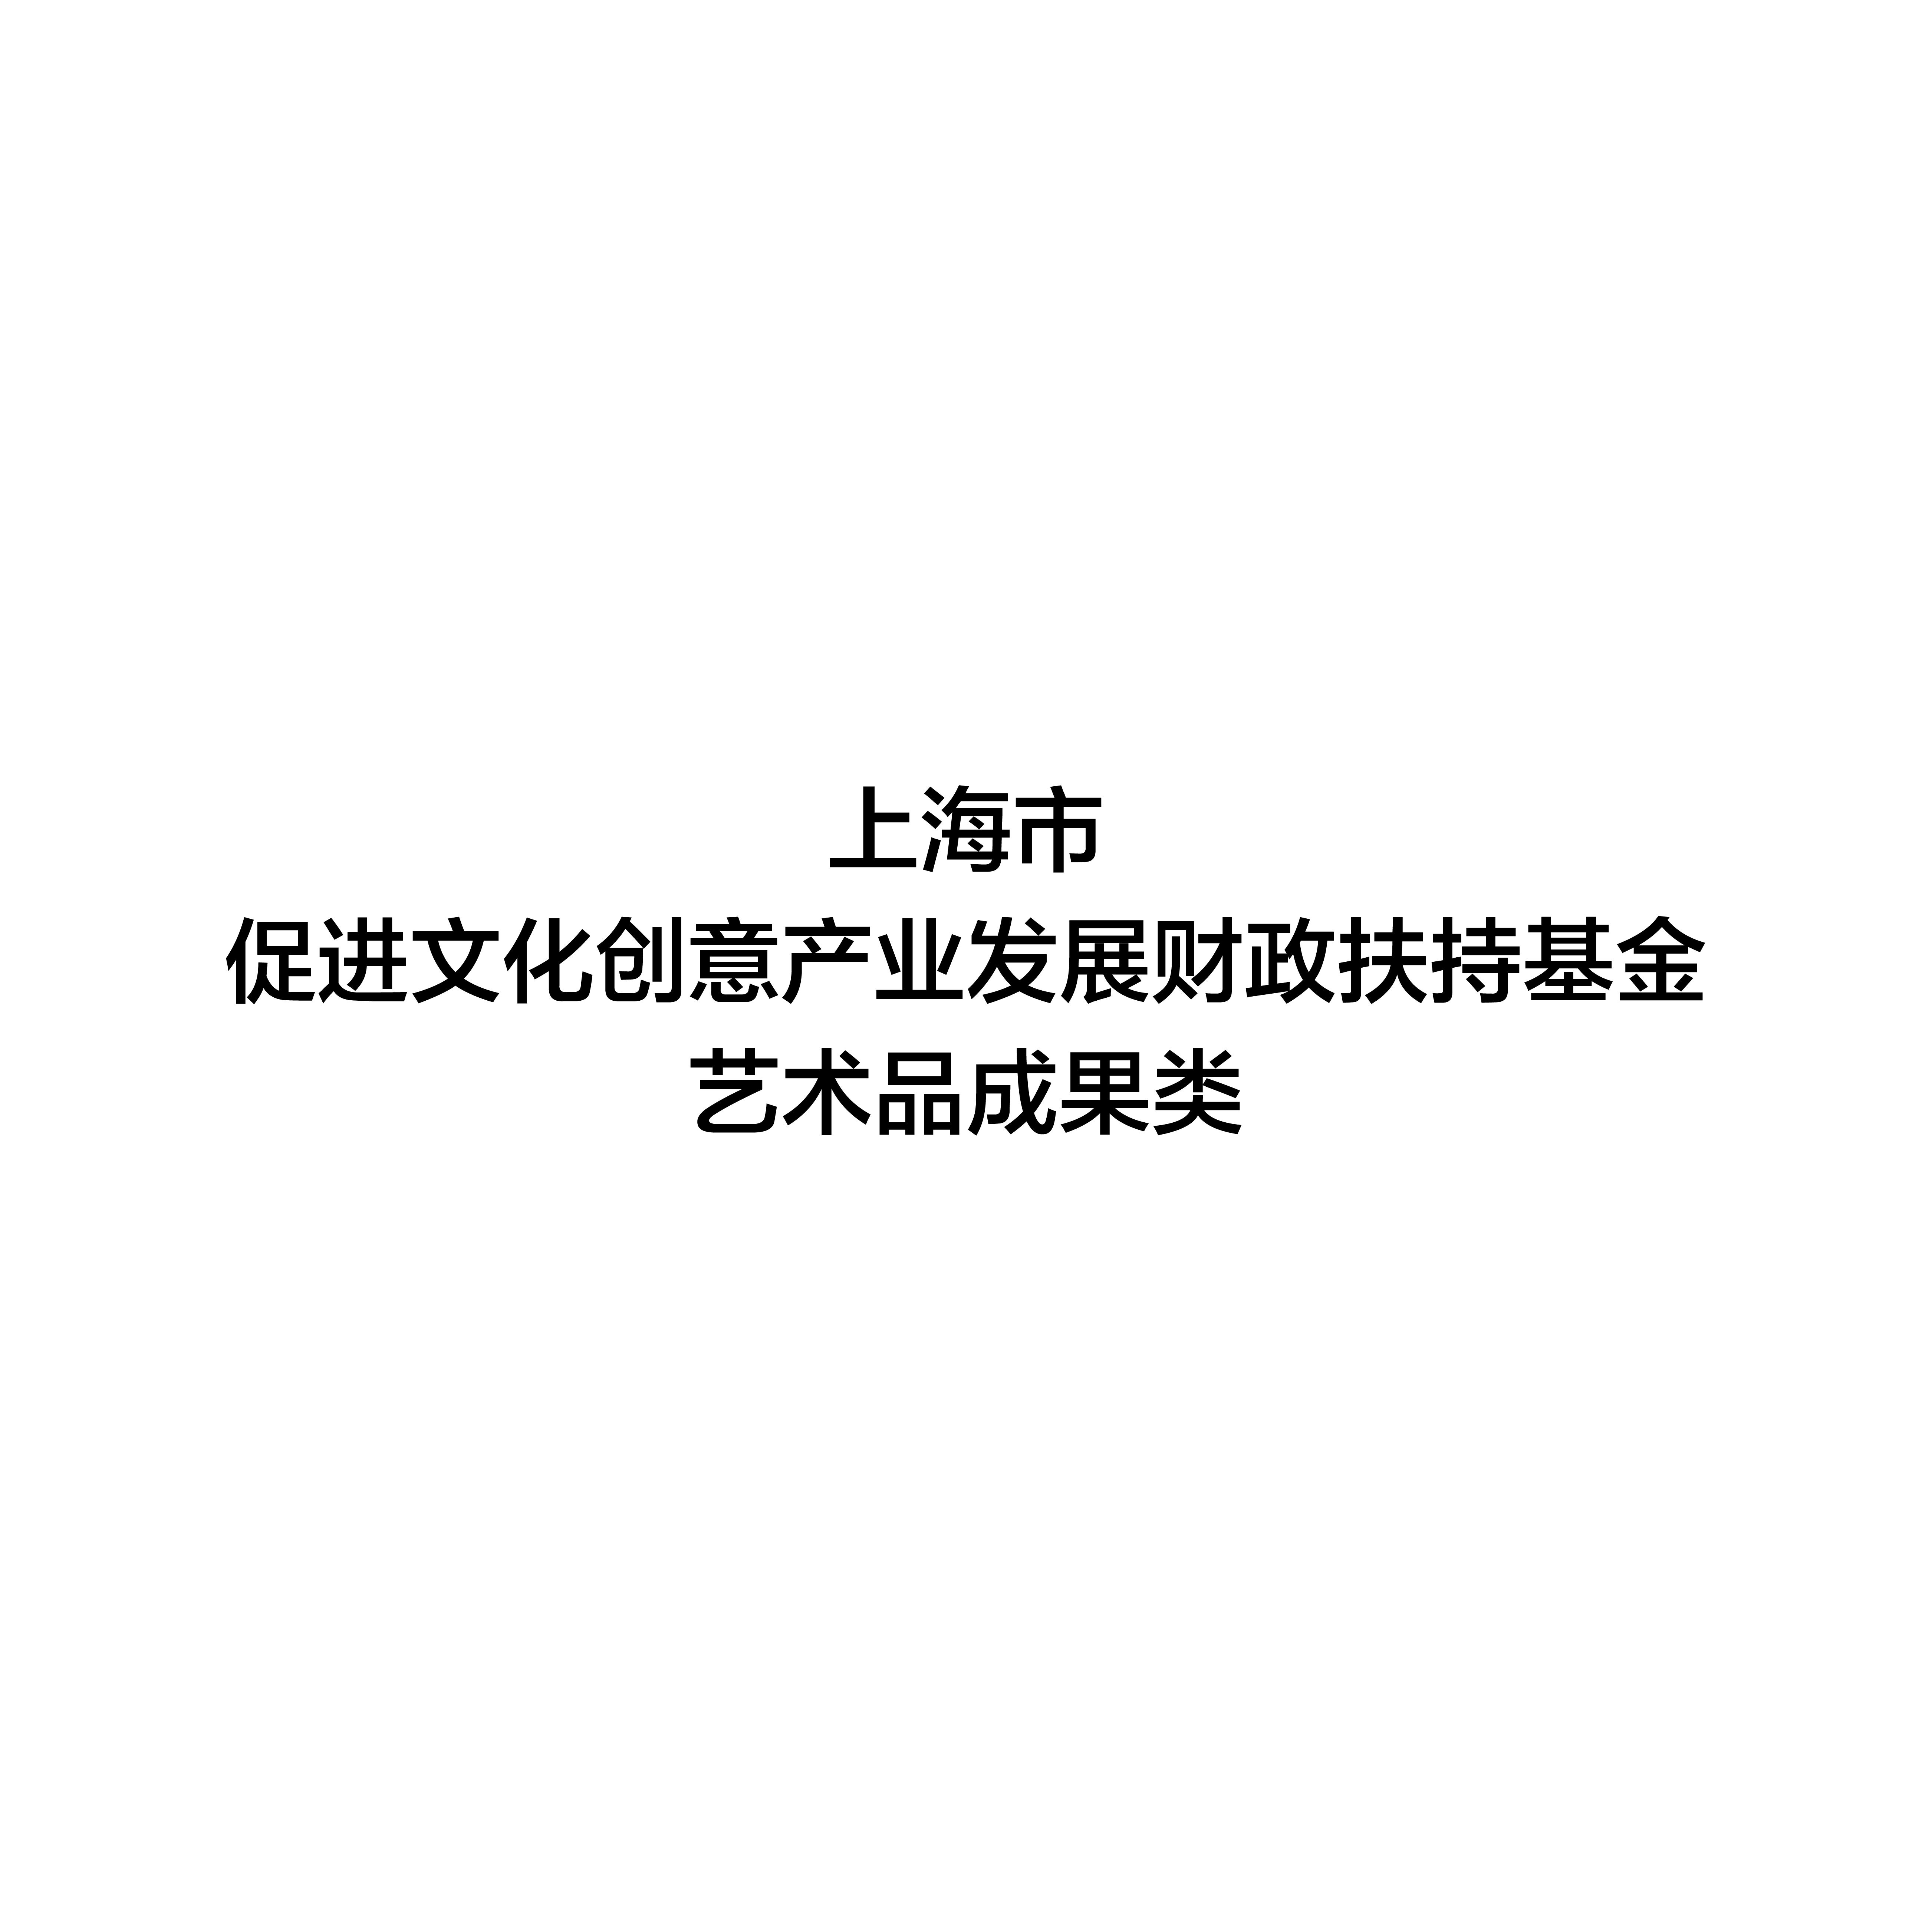 扶持基金logo-01